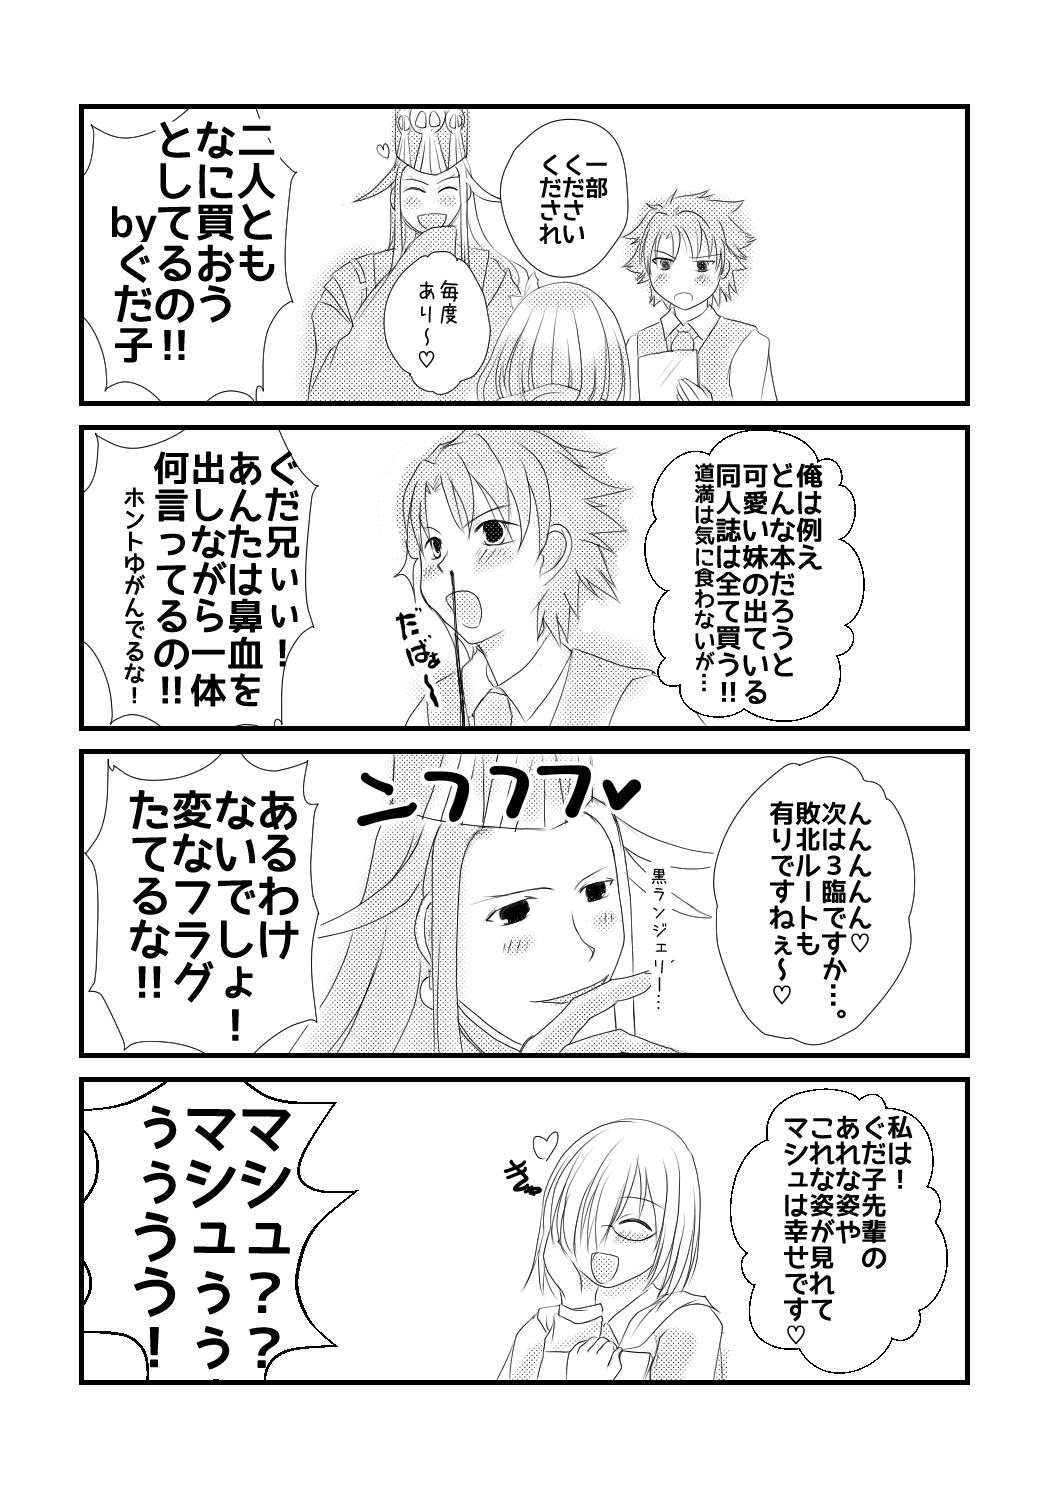 ] Rin guda ♀ rakugaki guda yuru manga(Fate/Grand Order] 6